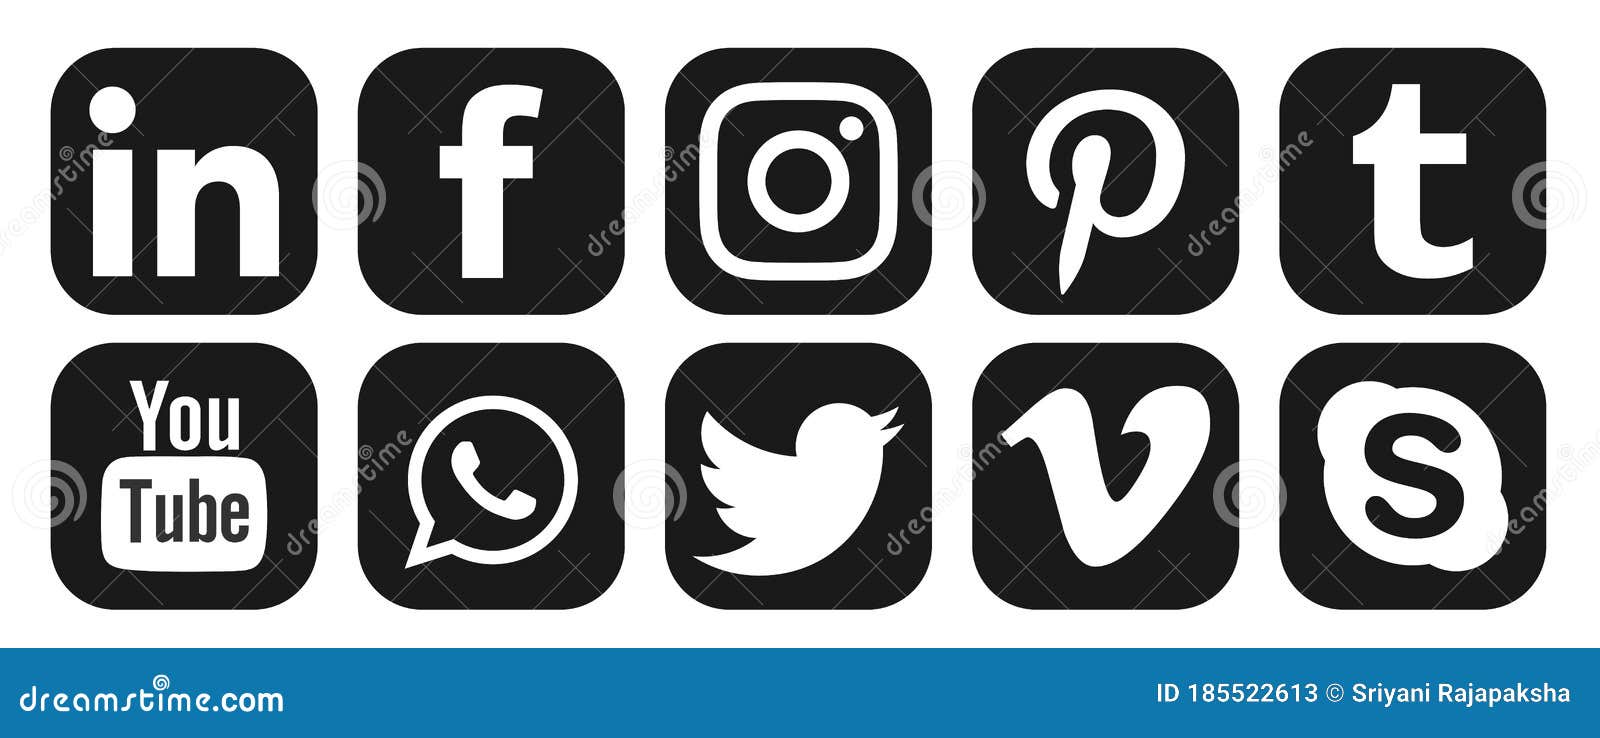 Facebook Instagram Whatsapp Youtube Linkedin Twitter Vimeo Skyp Pinteret Logo Icon In Black Vector Isolated On White Background Editorial Stock Photo Illustration Of Logo Vector